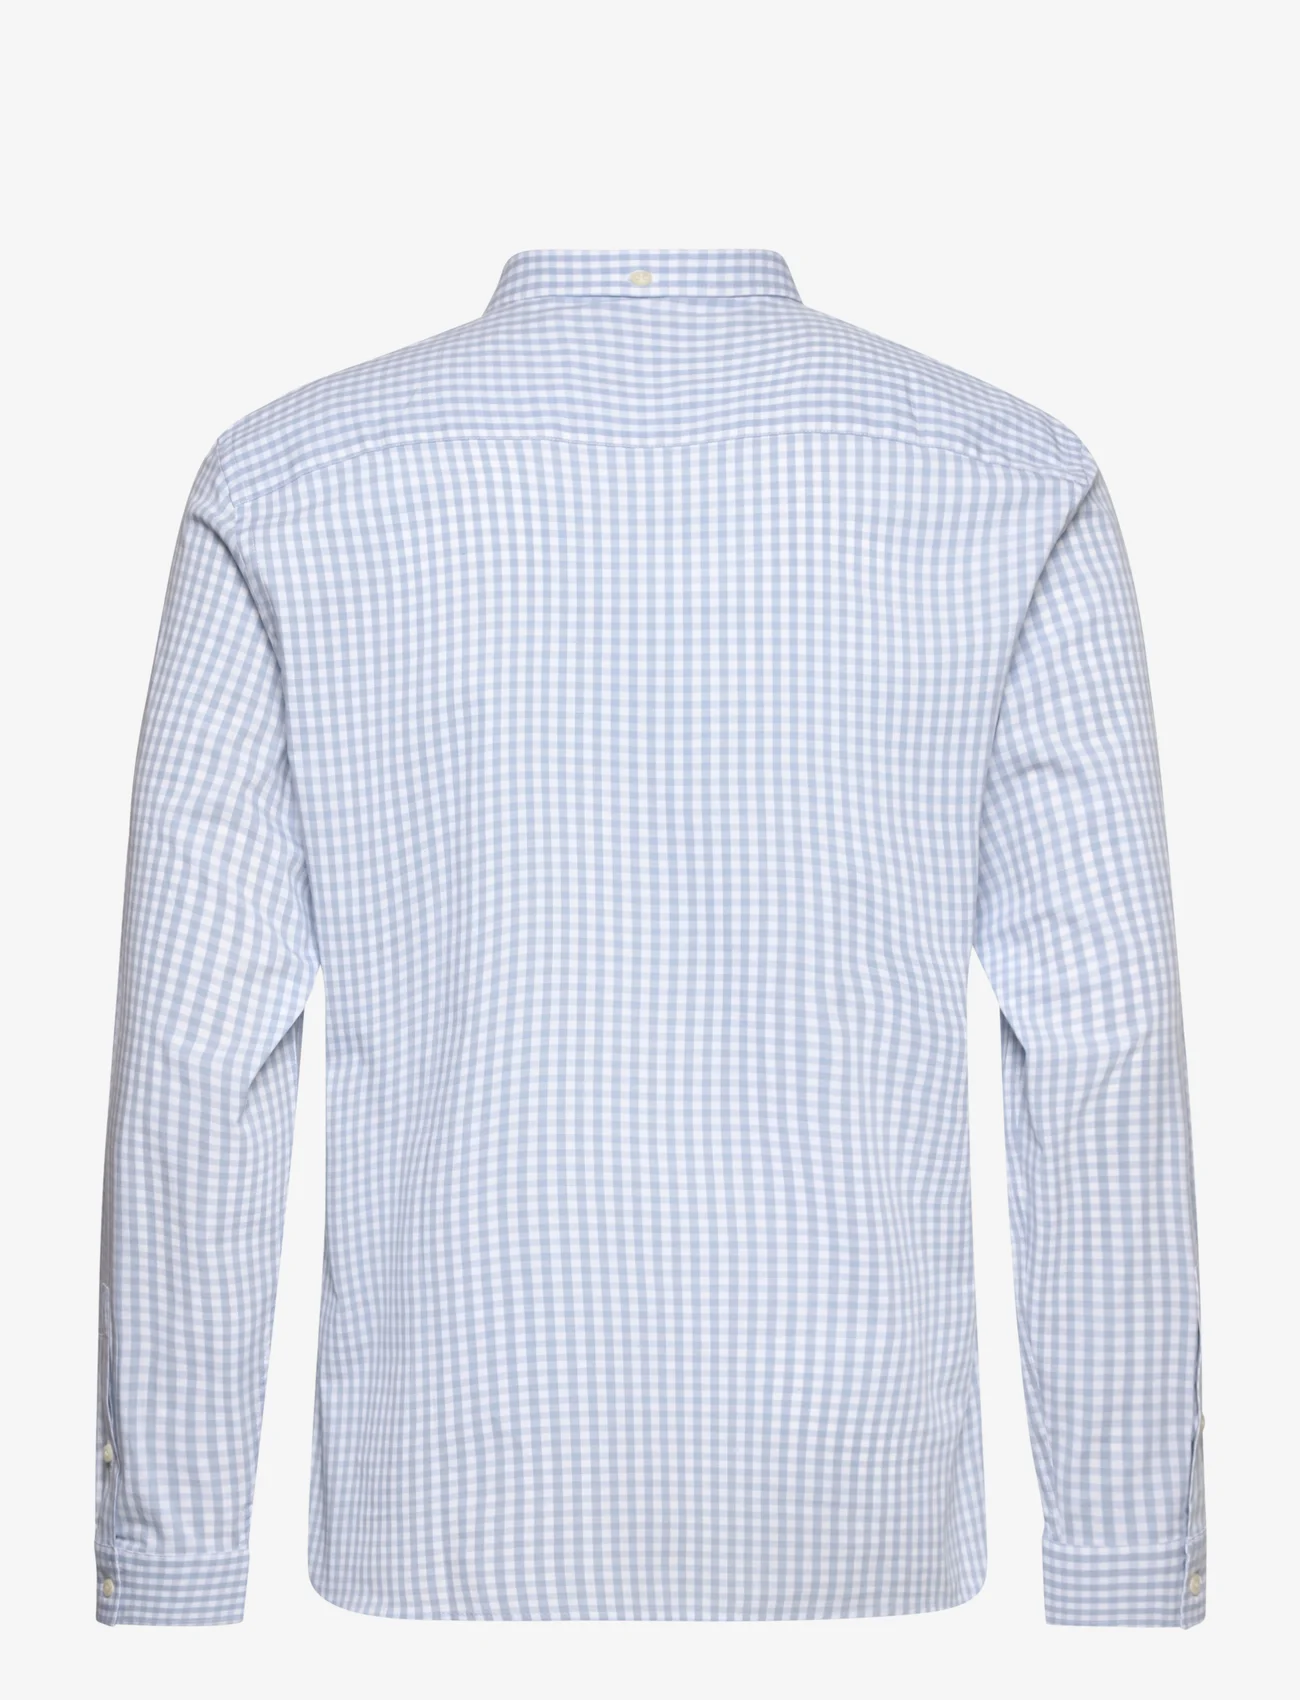 Lyle & Scott - LS Slim Fit Gingham Shirt - checkered shirts - light blue/ white - 1